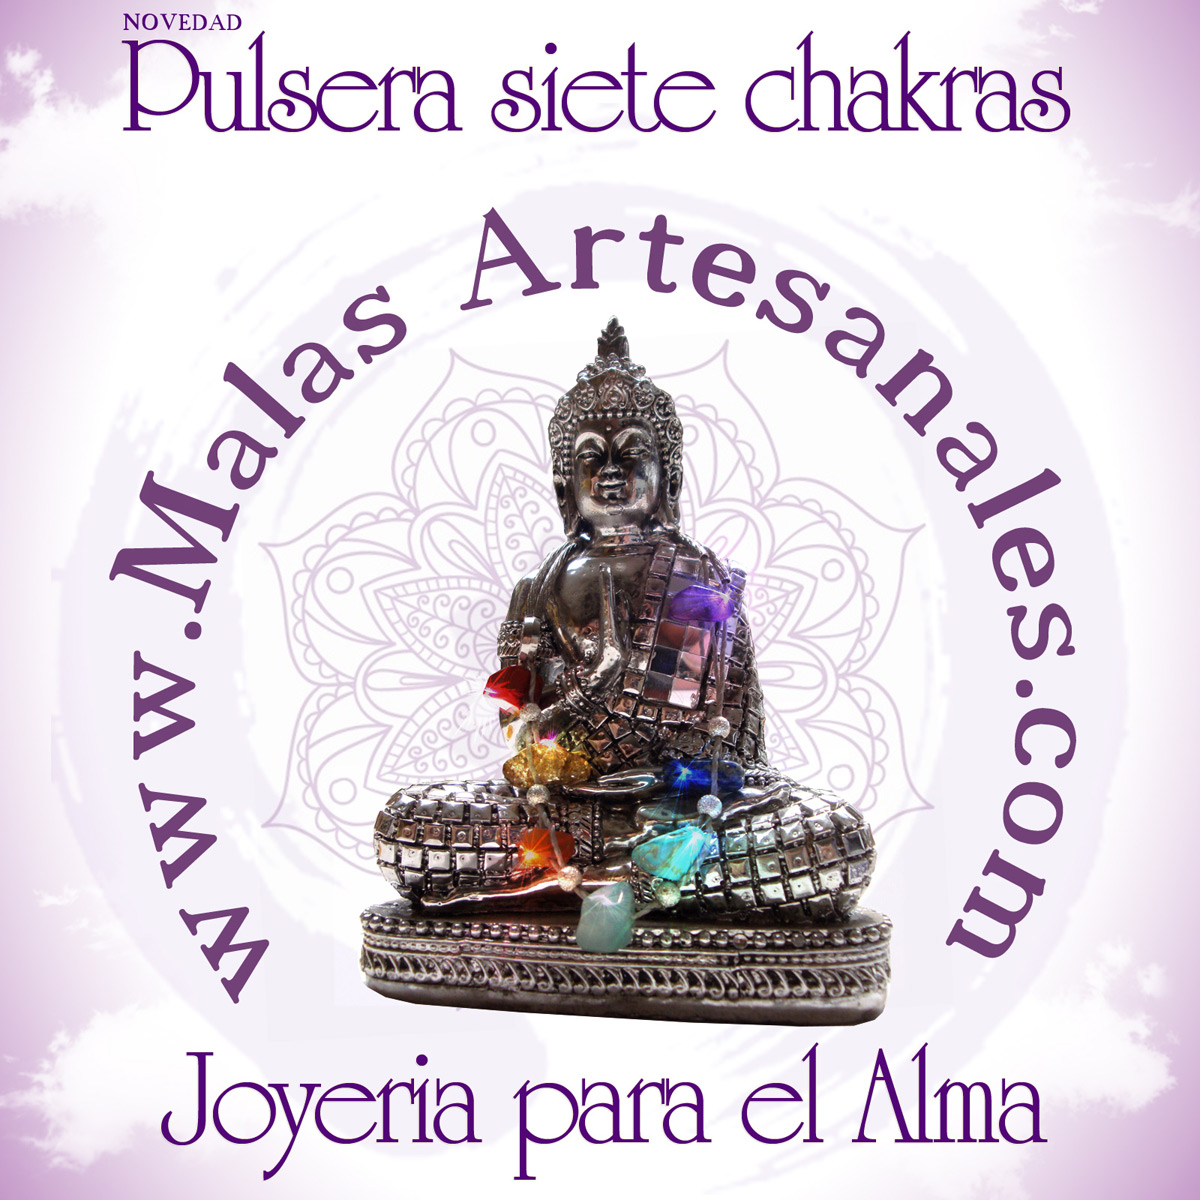 pulsera_espiritual_artesanal_malas_shakra_bouddha_meditacion